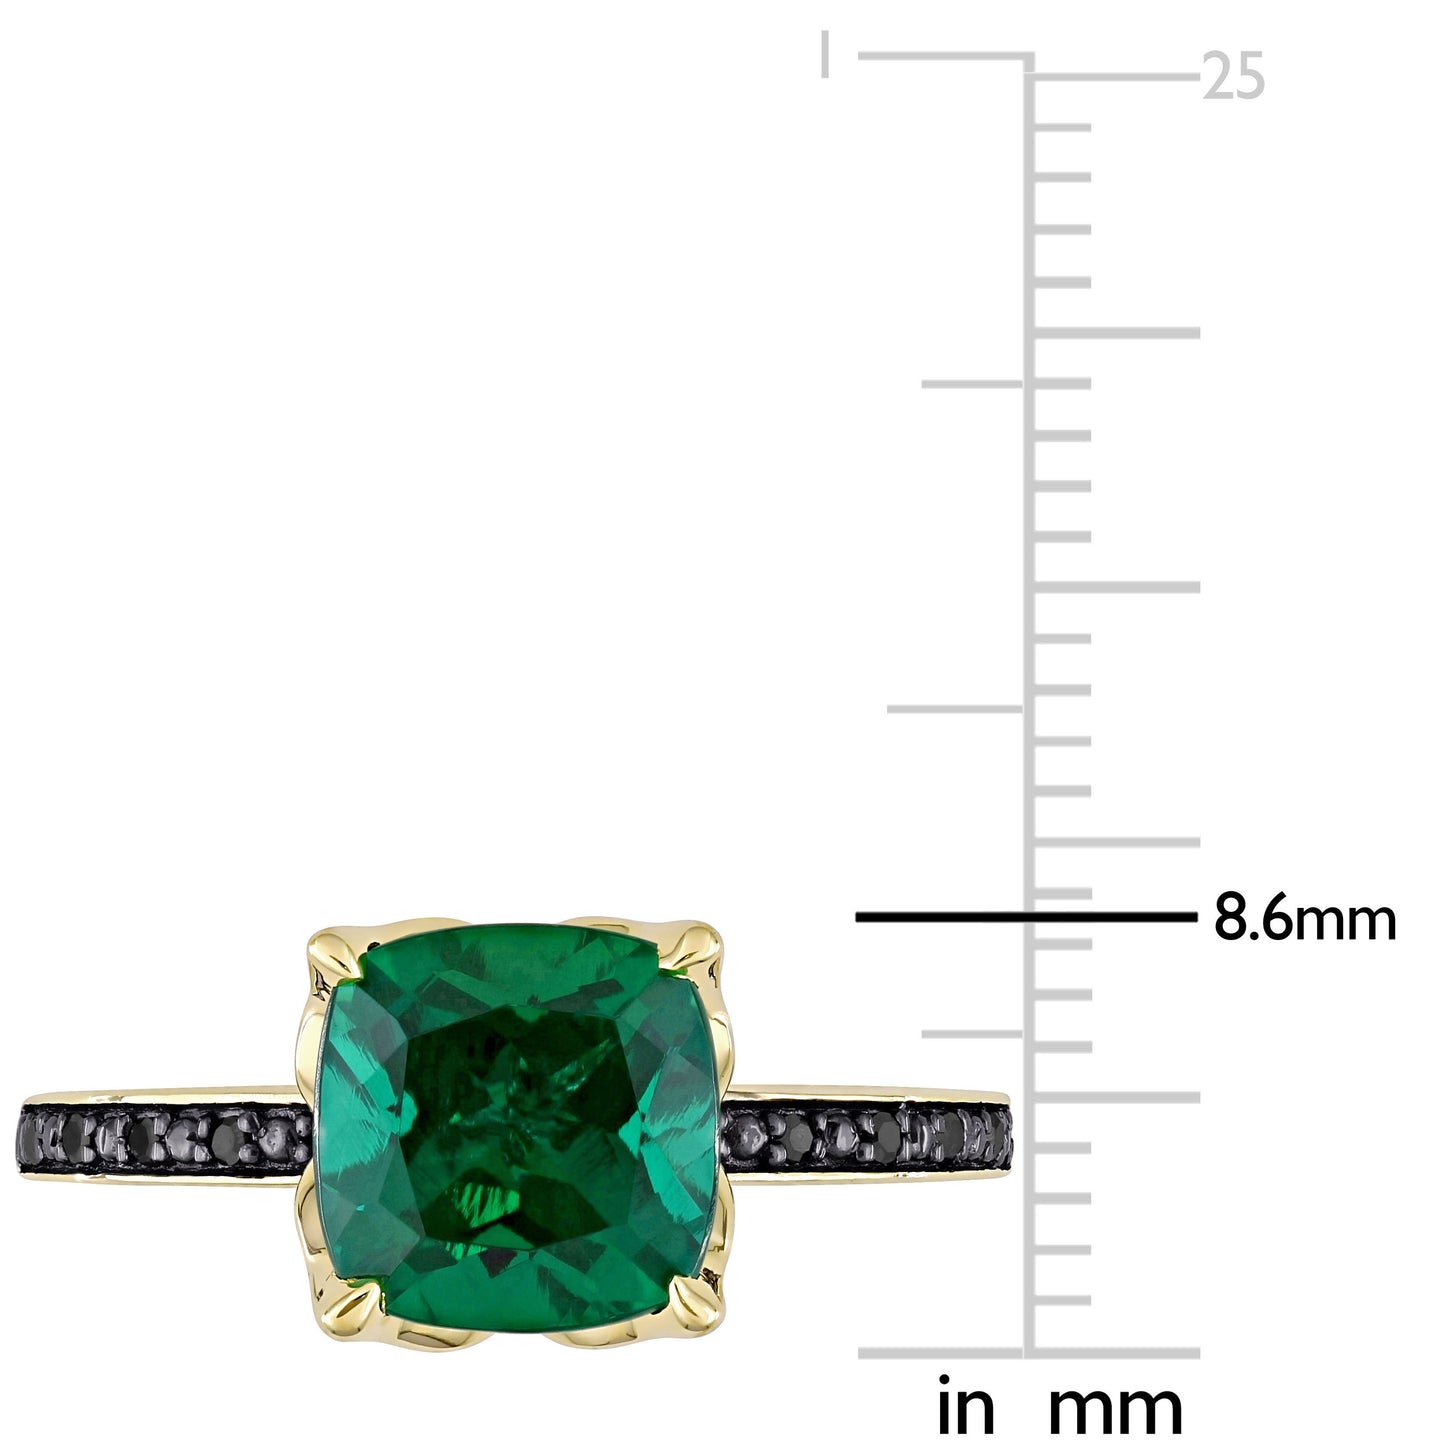 Cushion Cut Created Emerald  & Back Diamond Ring in 10k Yellow Gold